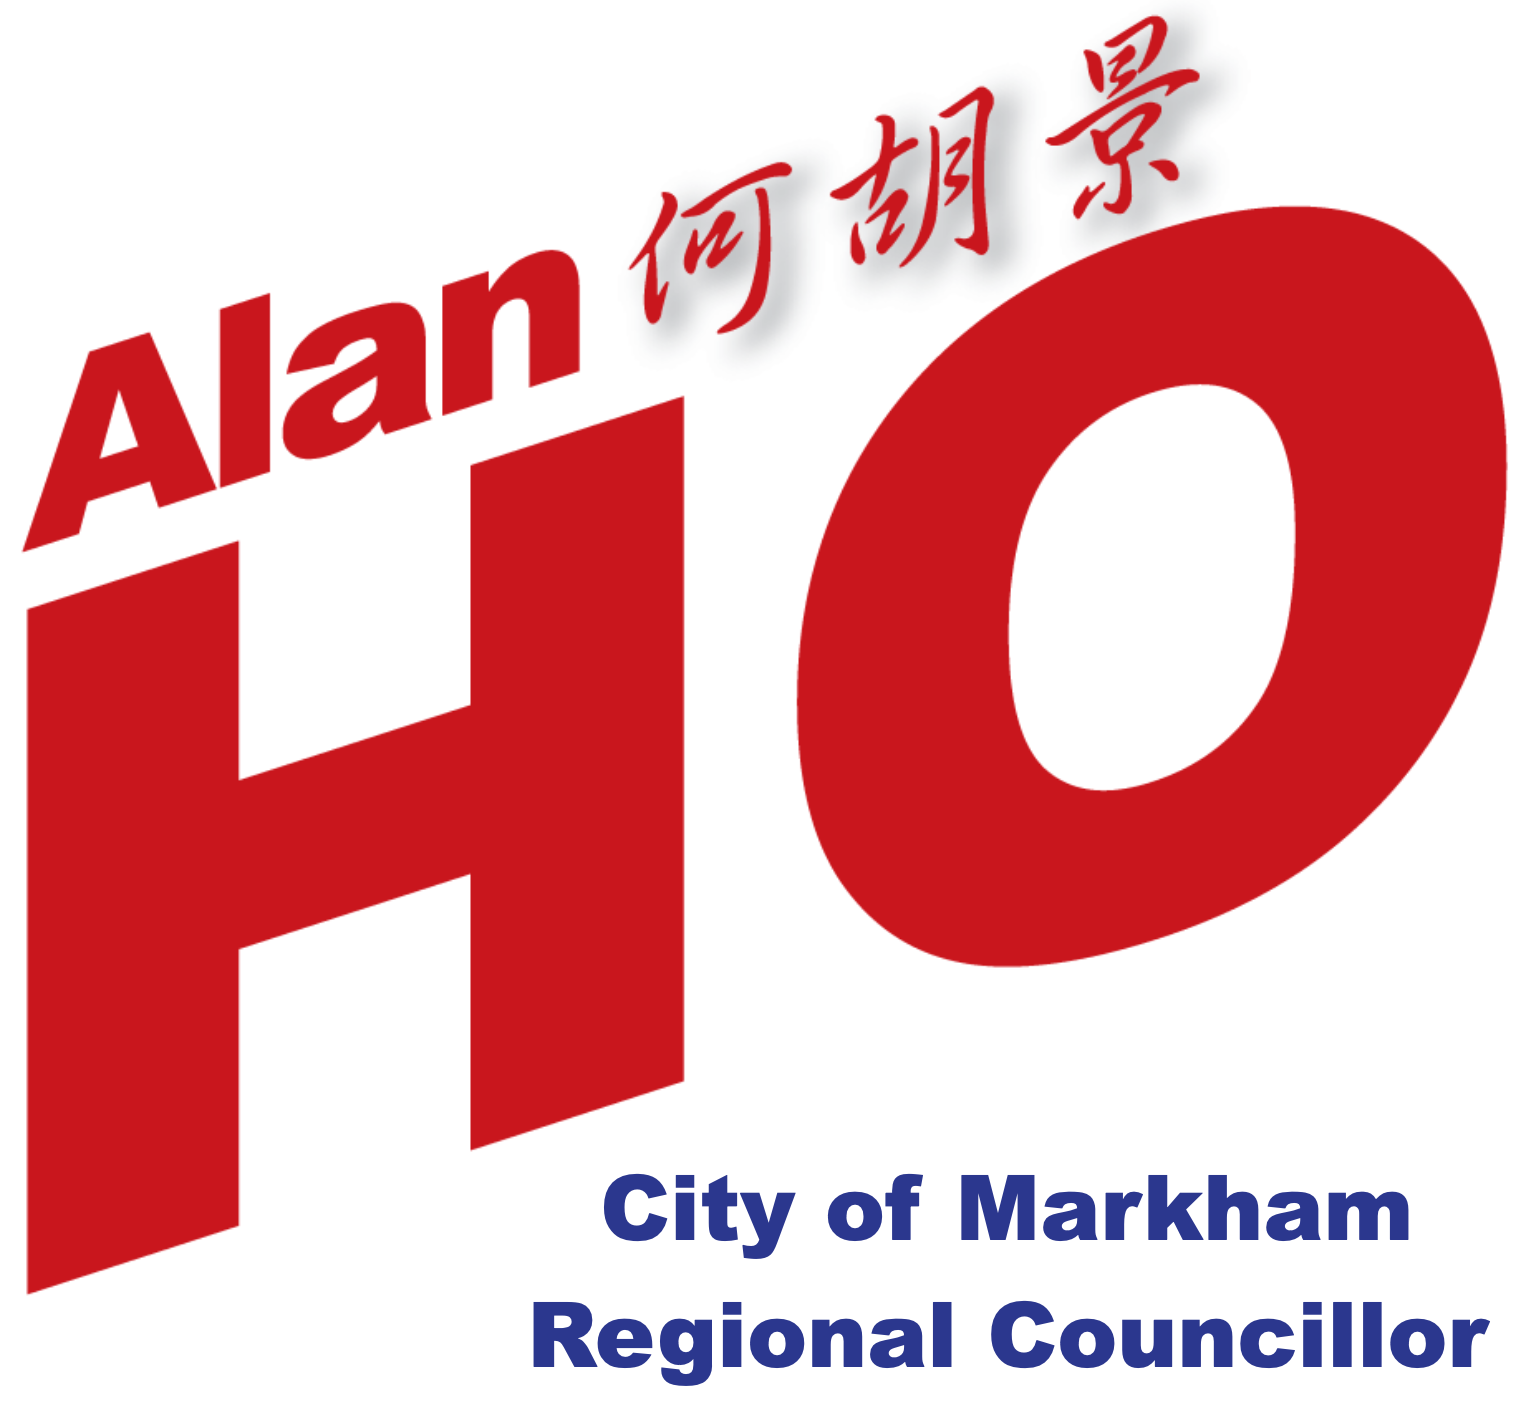 City of Markham Regional Councillor Alan Ho